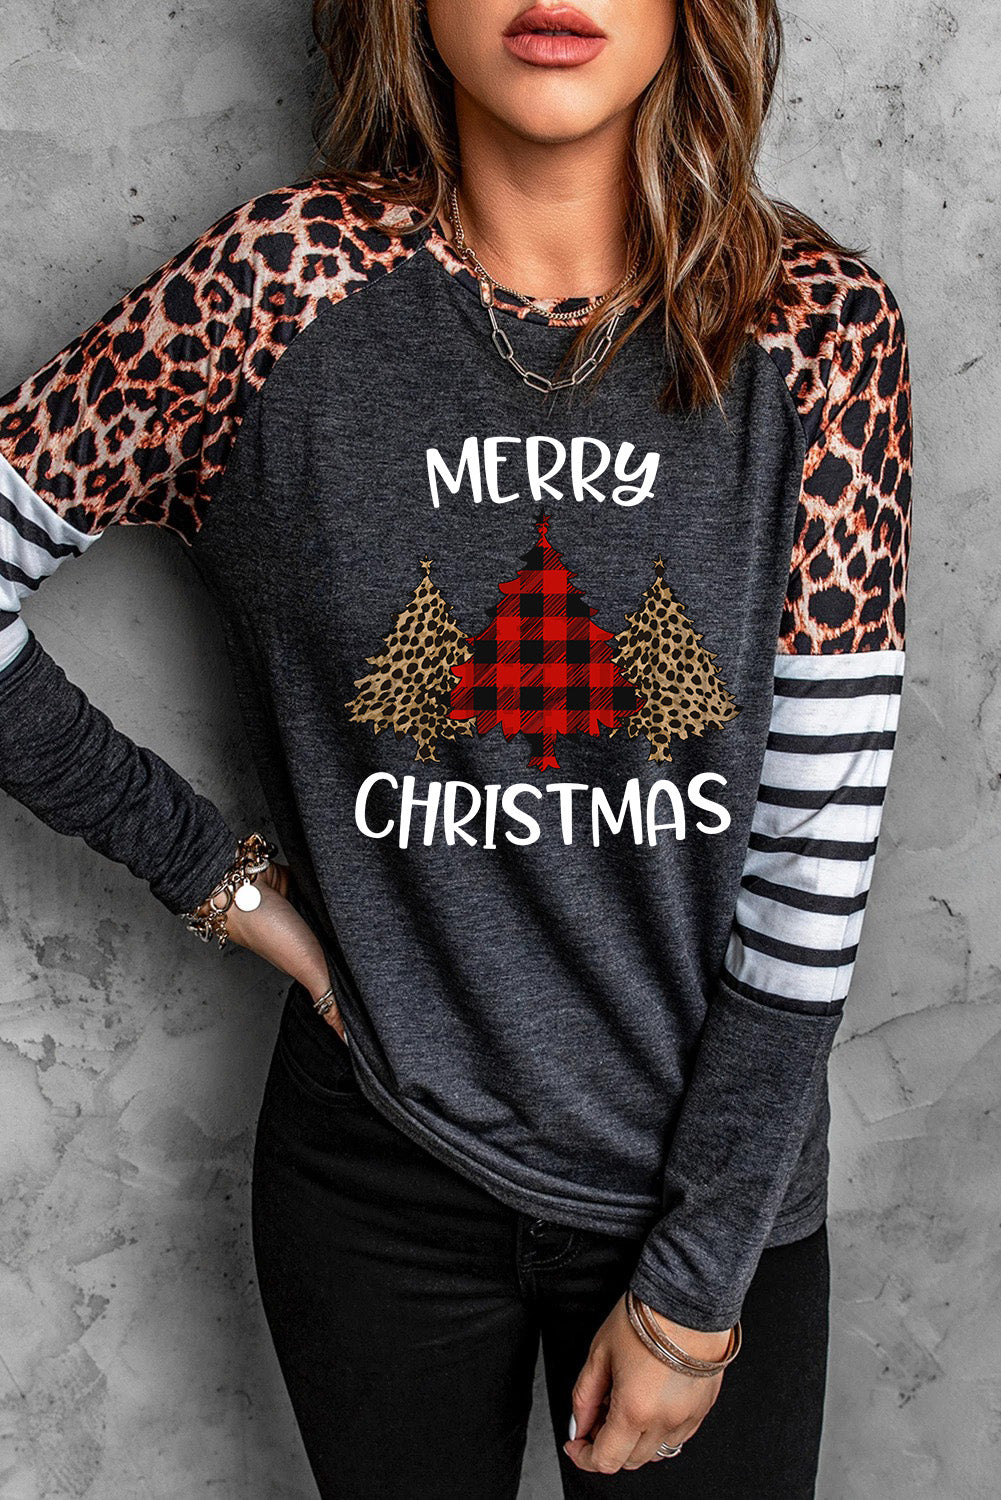 LC25213563-2-S, LC25213563-2-M, LC25213563-2-L, LC25213563-2-XL, LC25213563-2-2XL, Black Women's Merry Christmas Leopard Top Xmas Sweatshirt